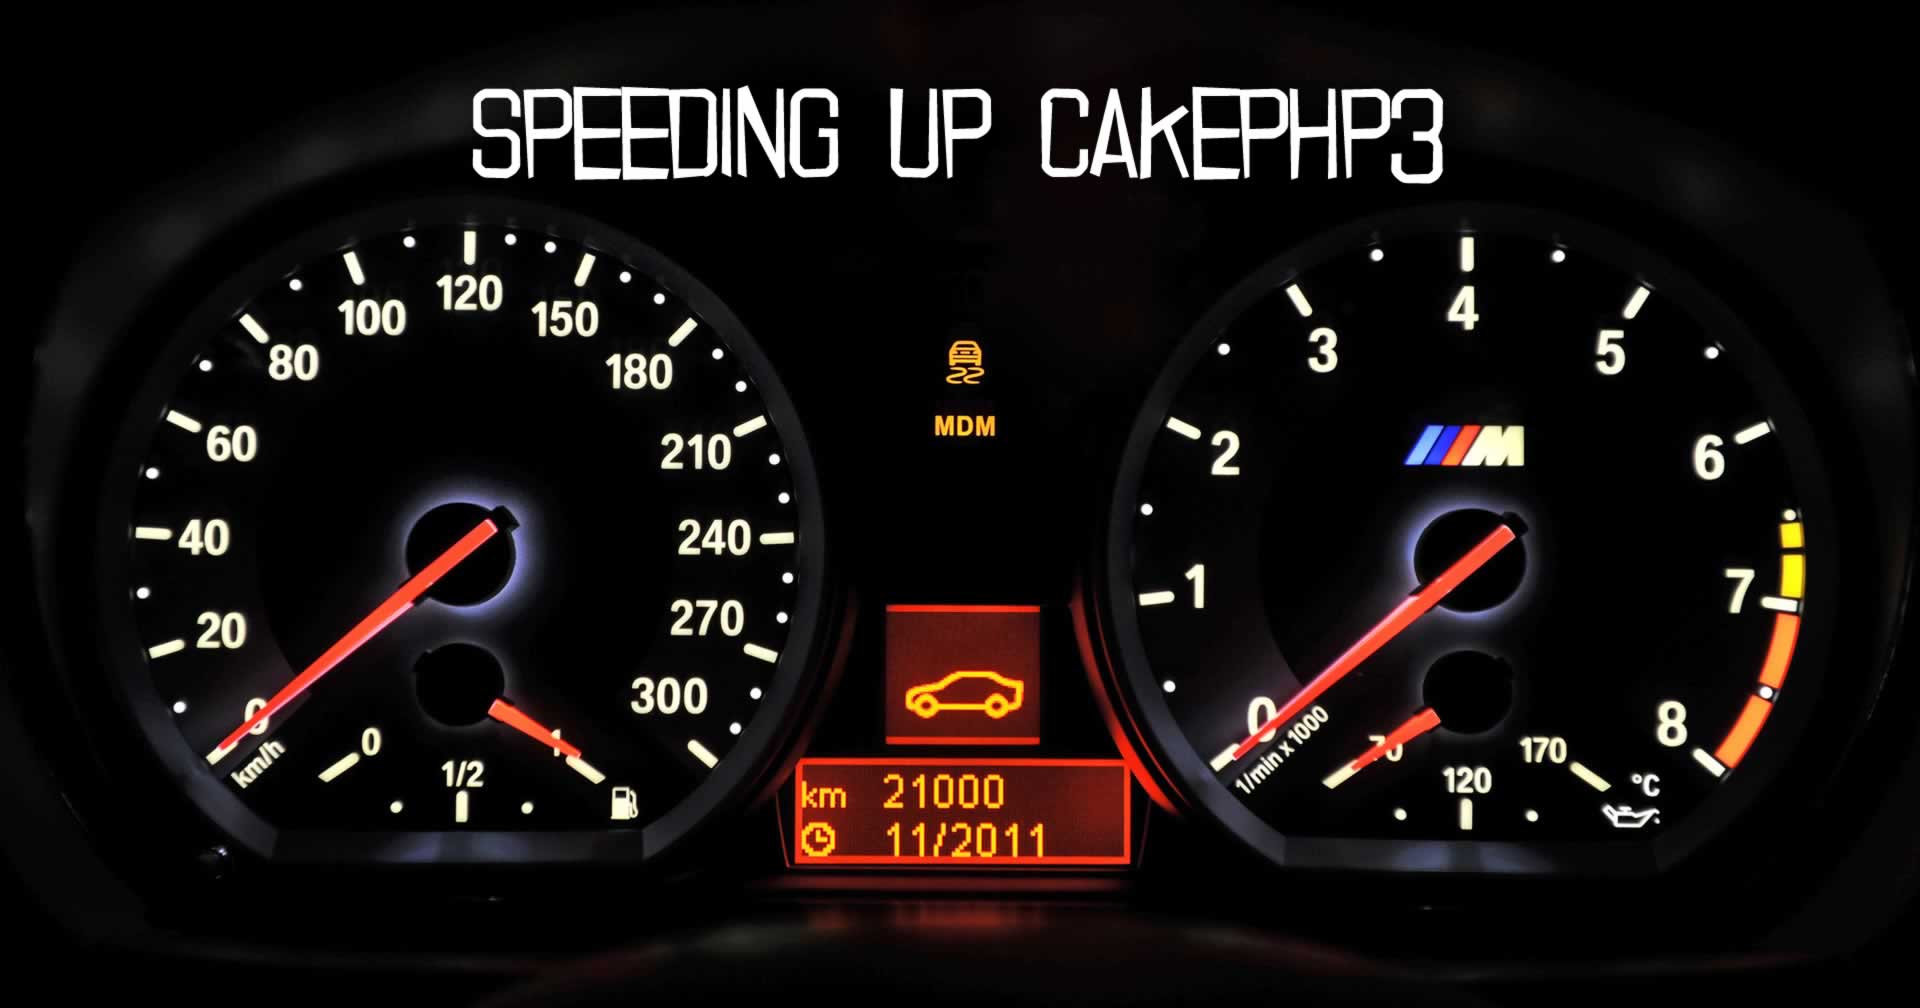 Speeding up CakePHP3